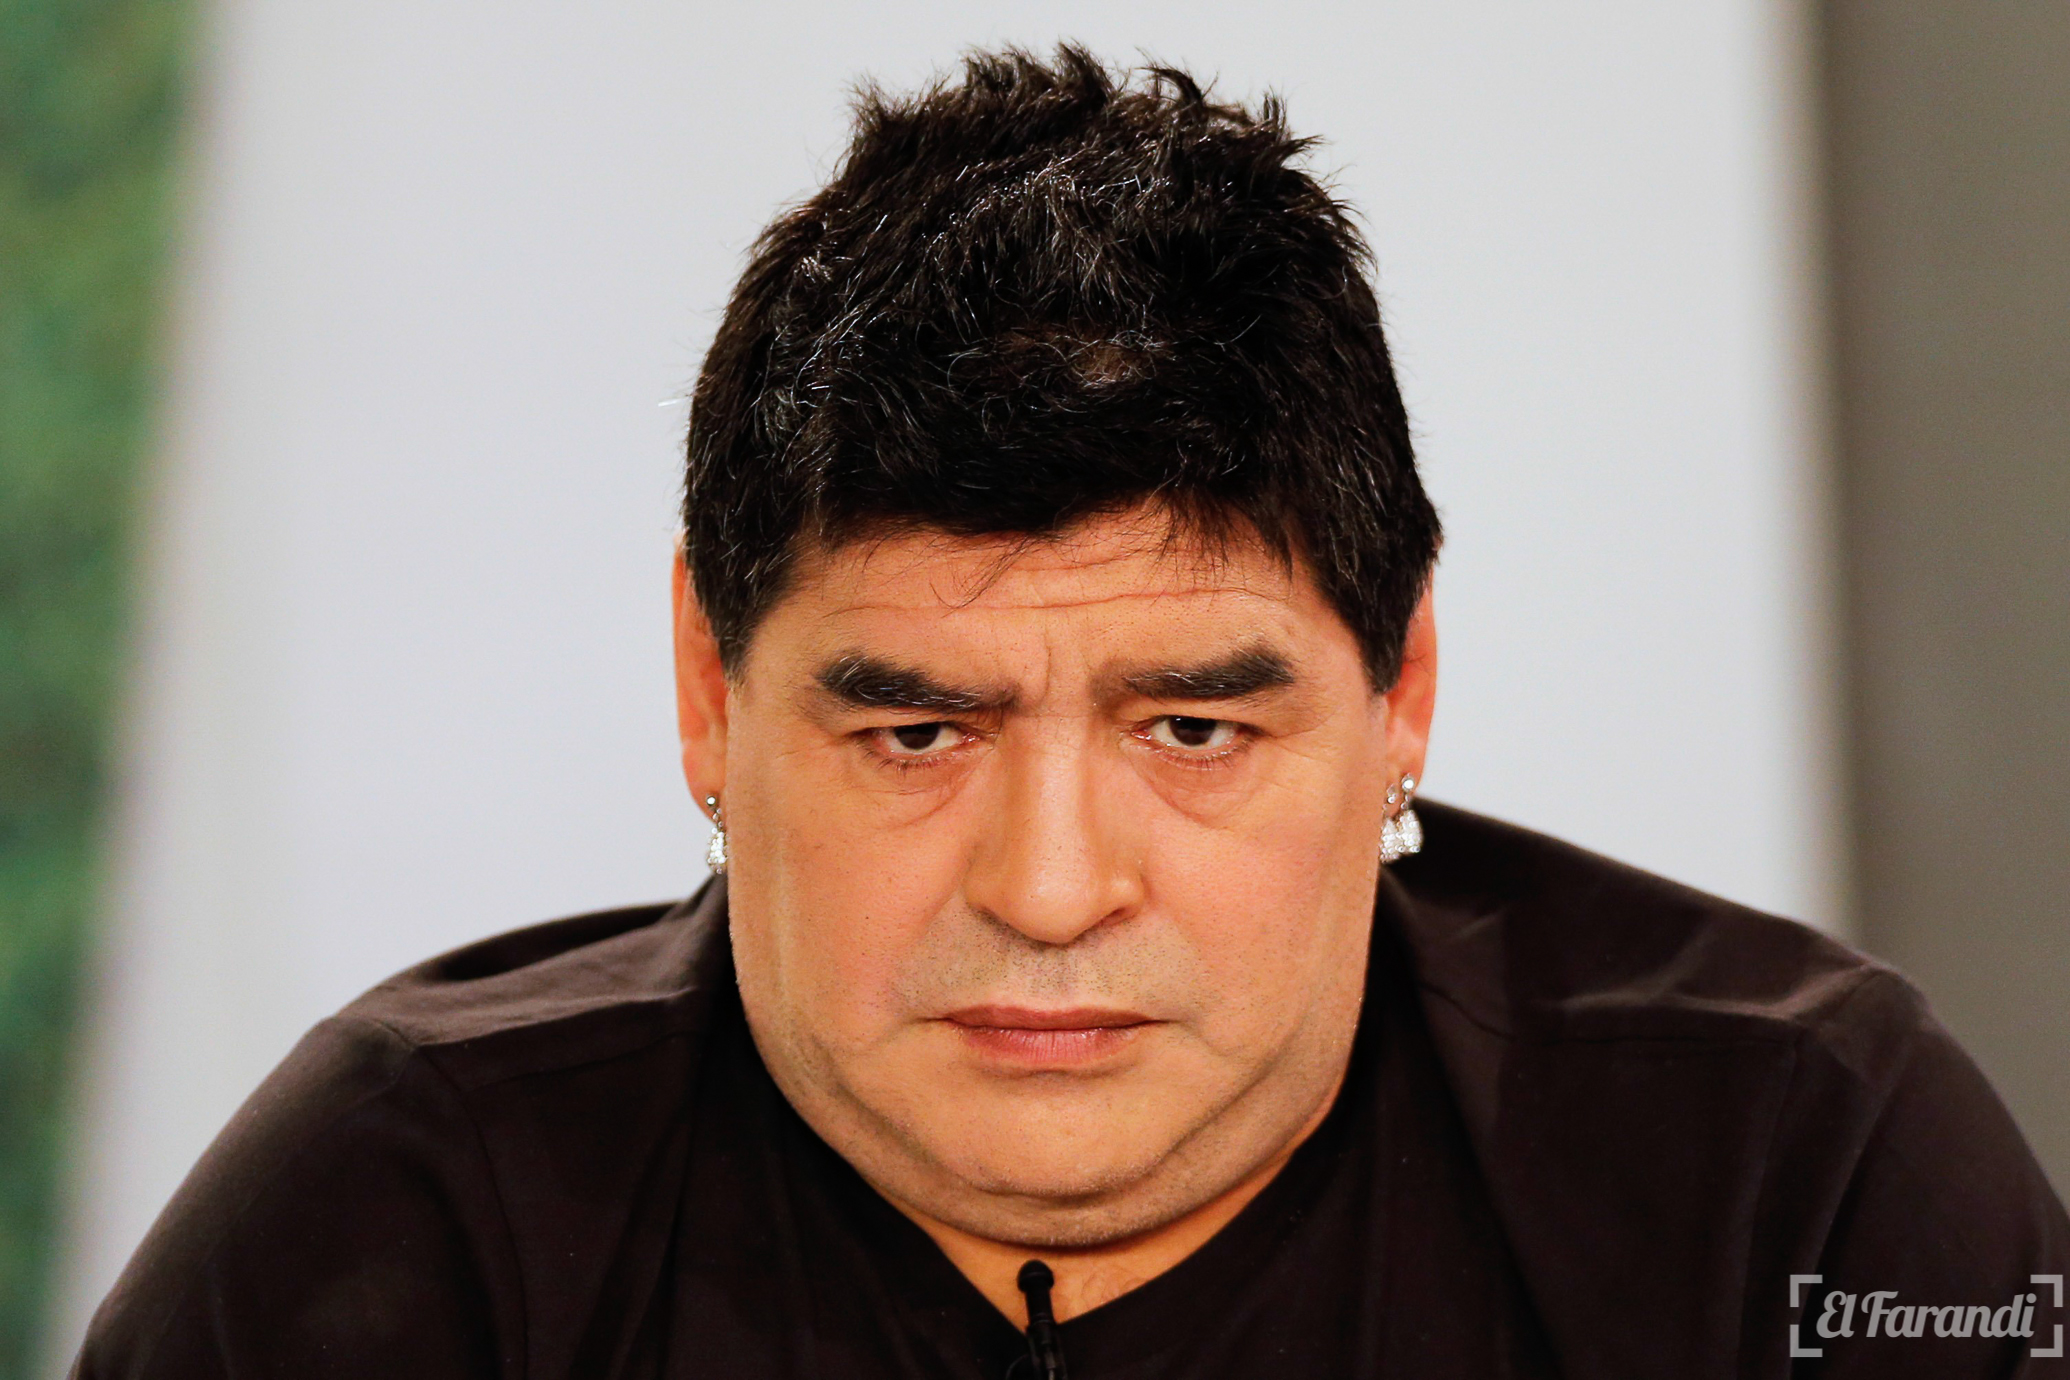 Argentina's soccer legend Diego Maradona looks on as he hosts his television show 'De Zurda' in Caracas